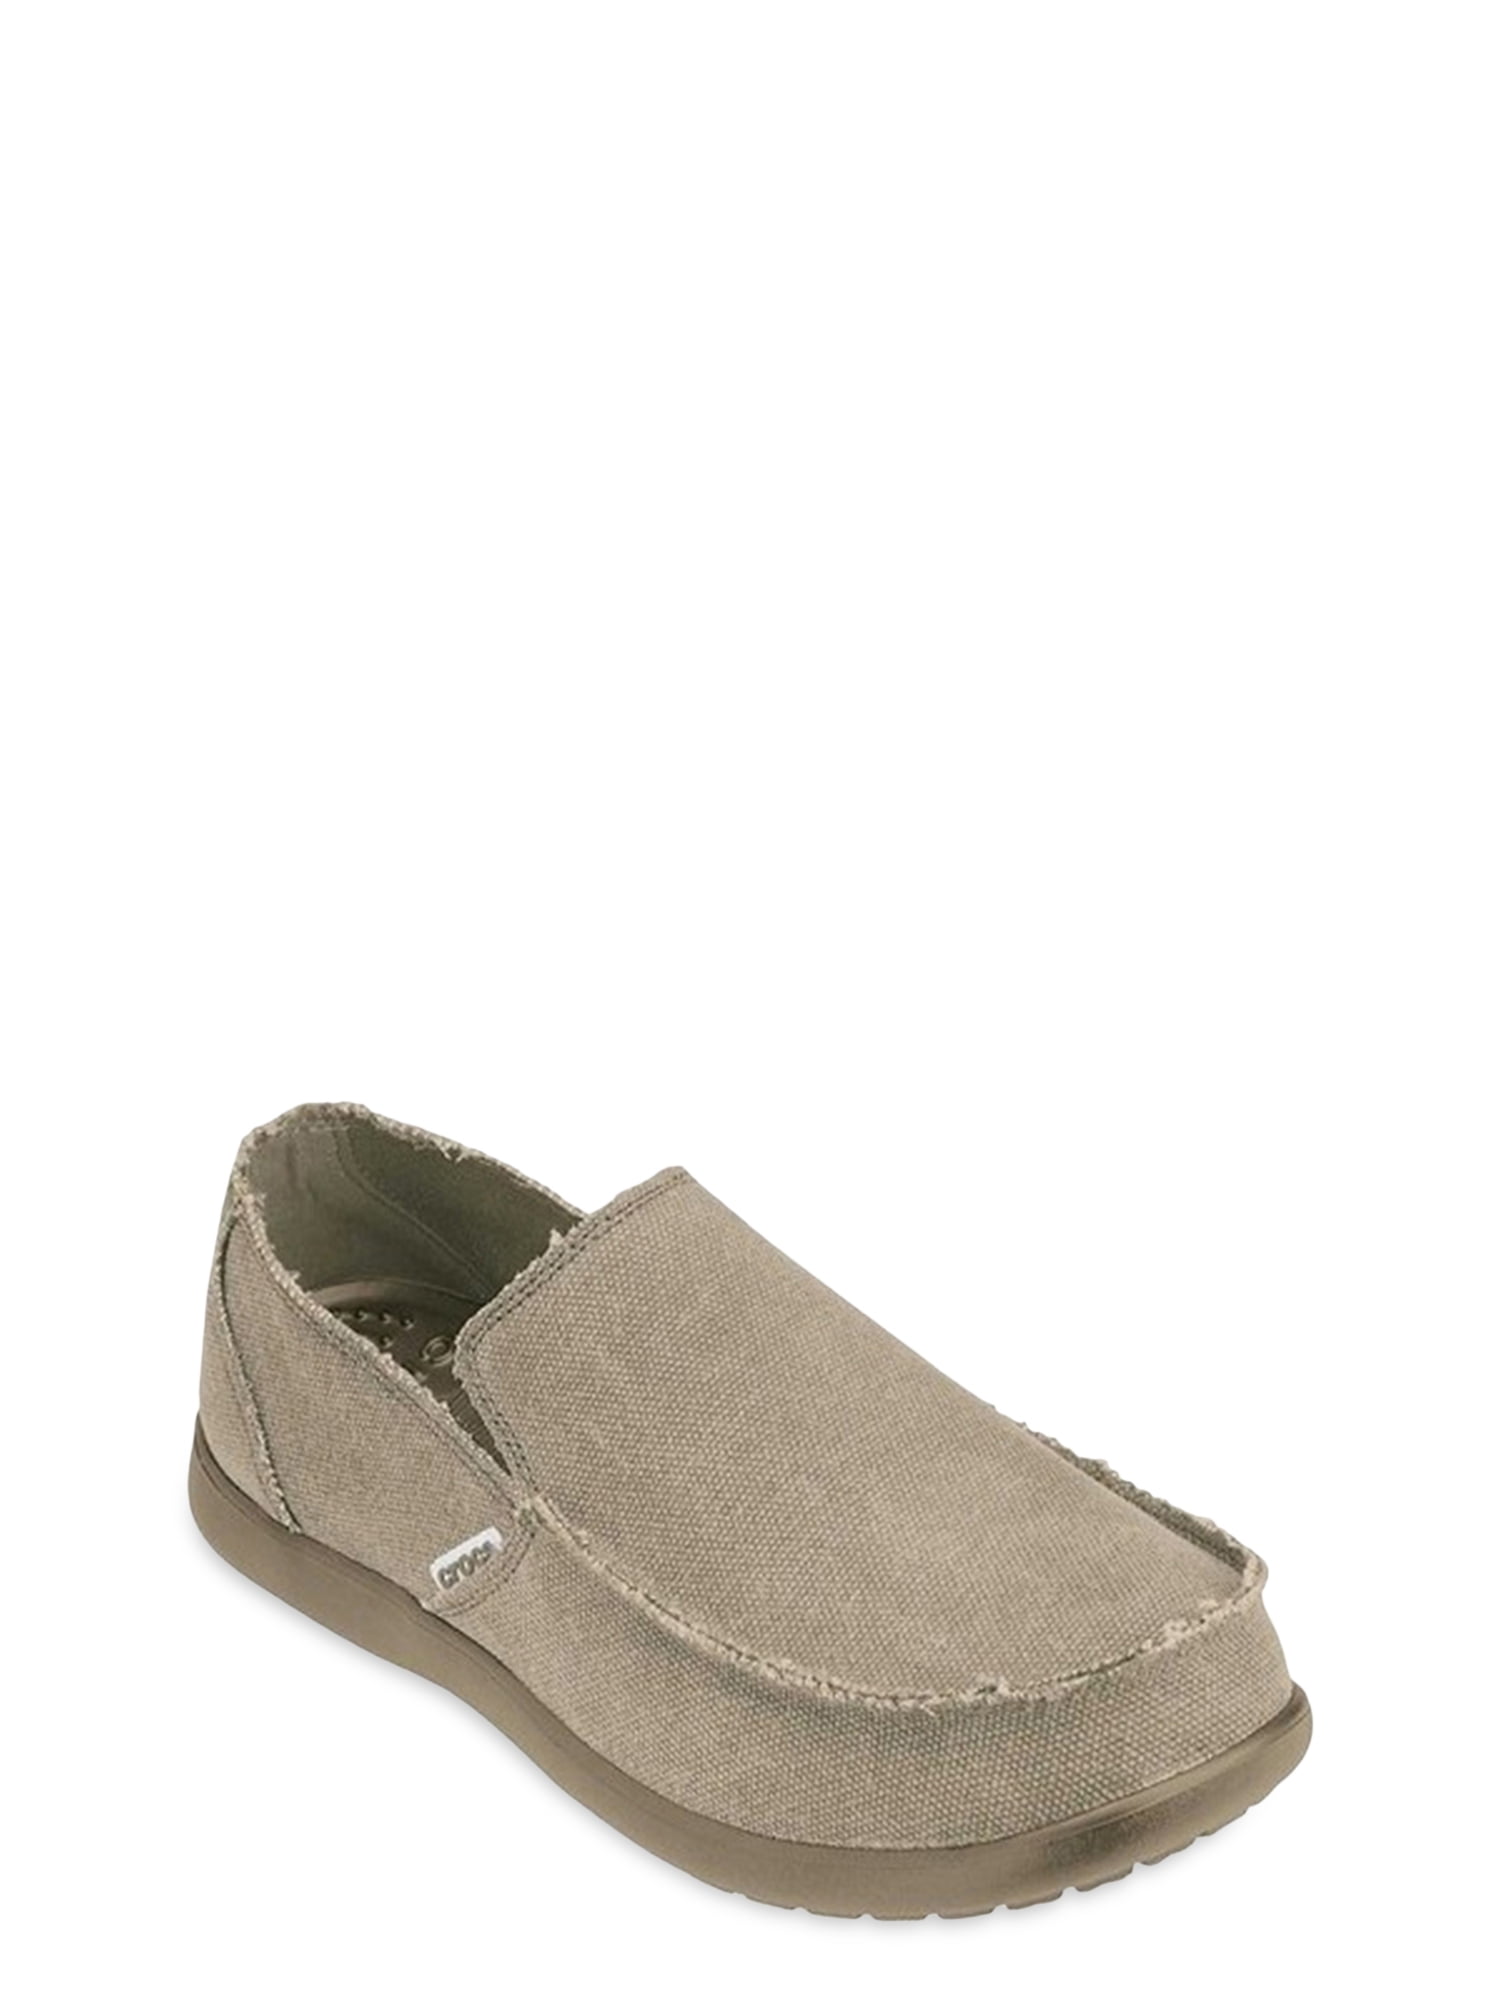 House Shoe NWT Crocs Men's Santa Cruz Corduroy Loafer Black & Grey Size 10 